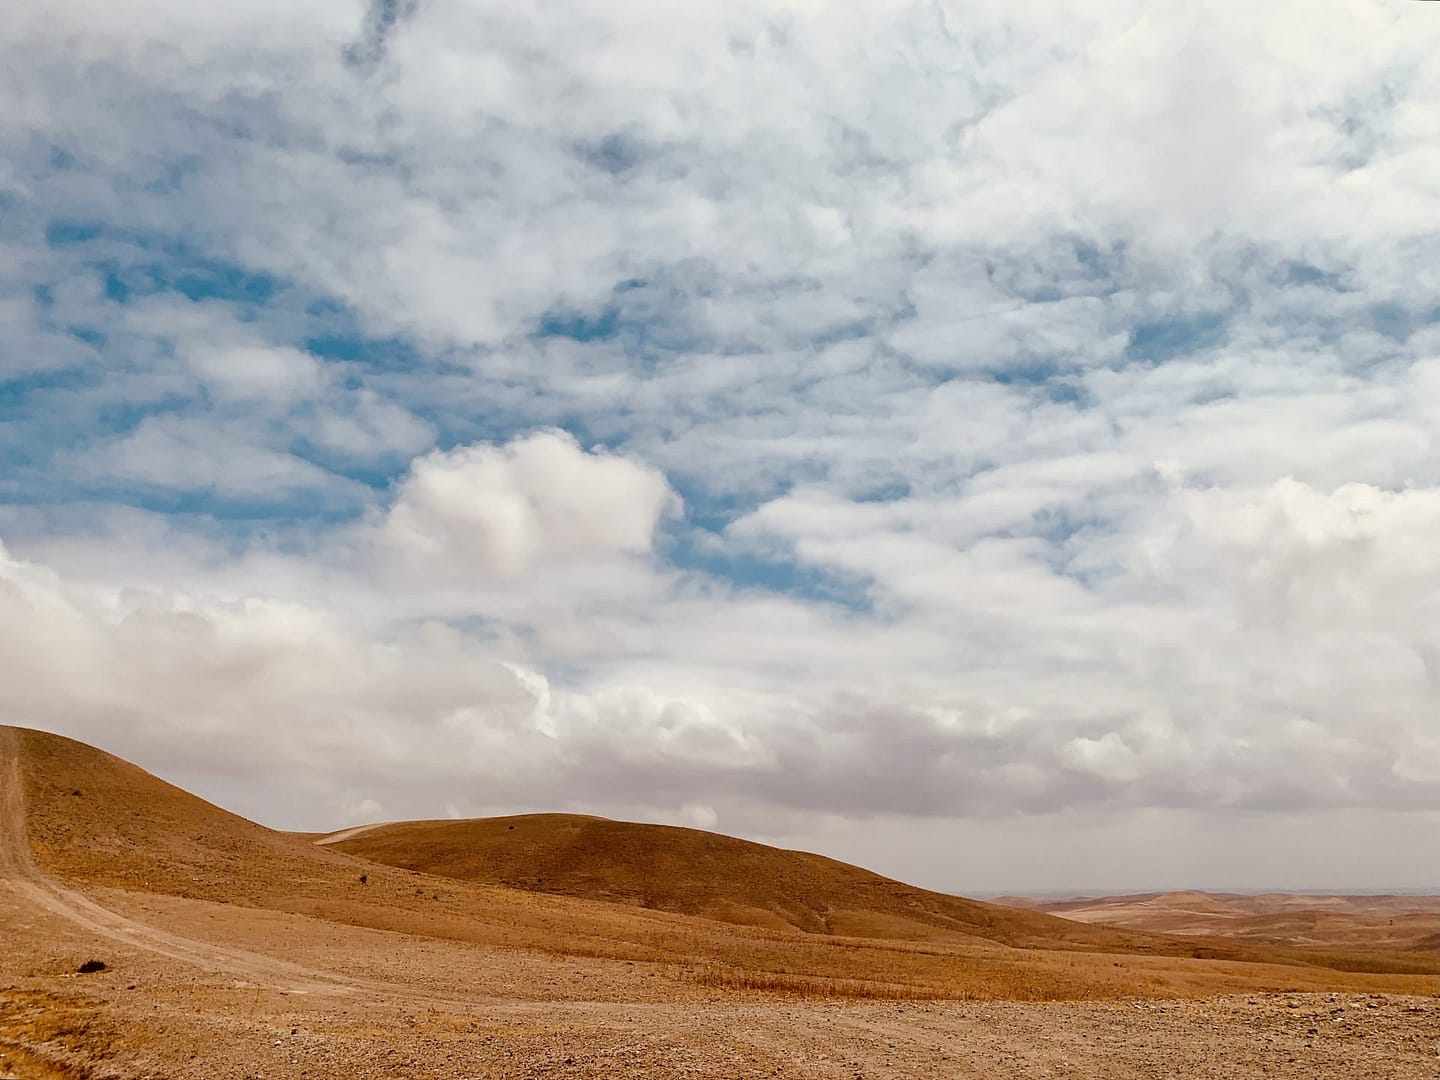 Agafay woestijn nabij Marrakech